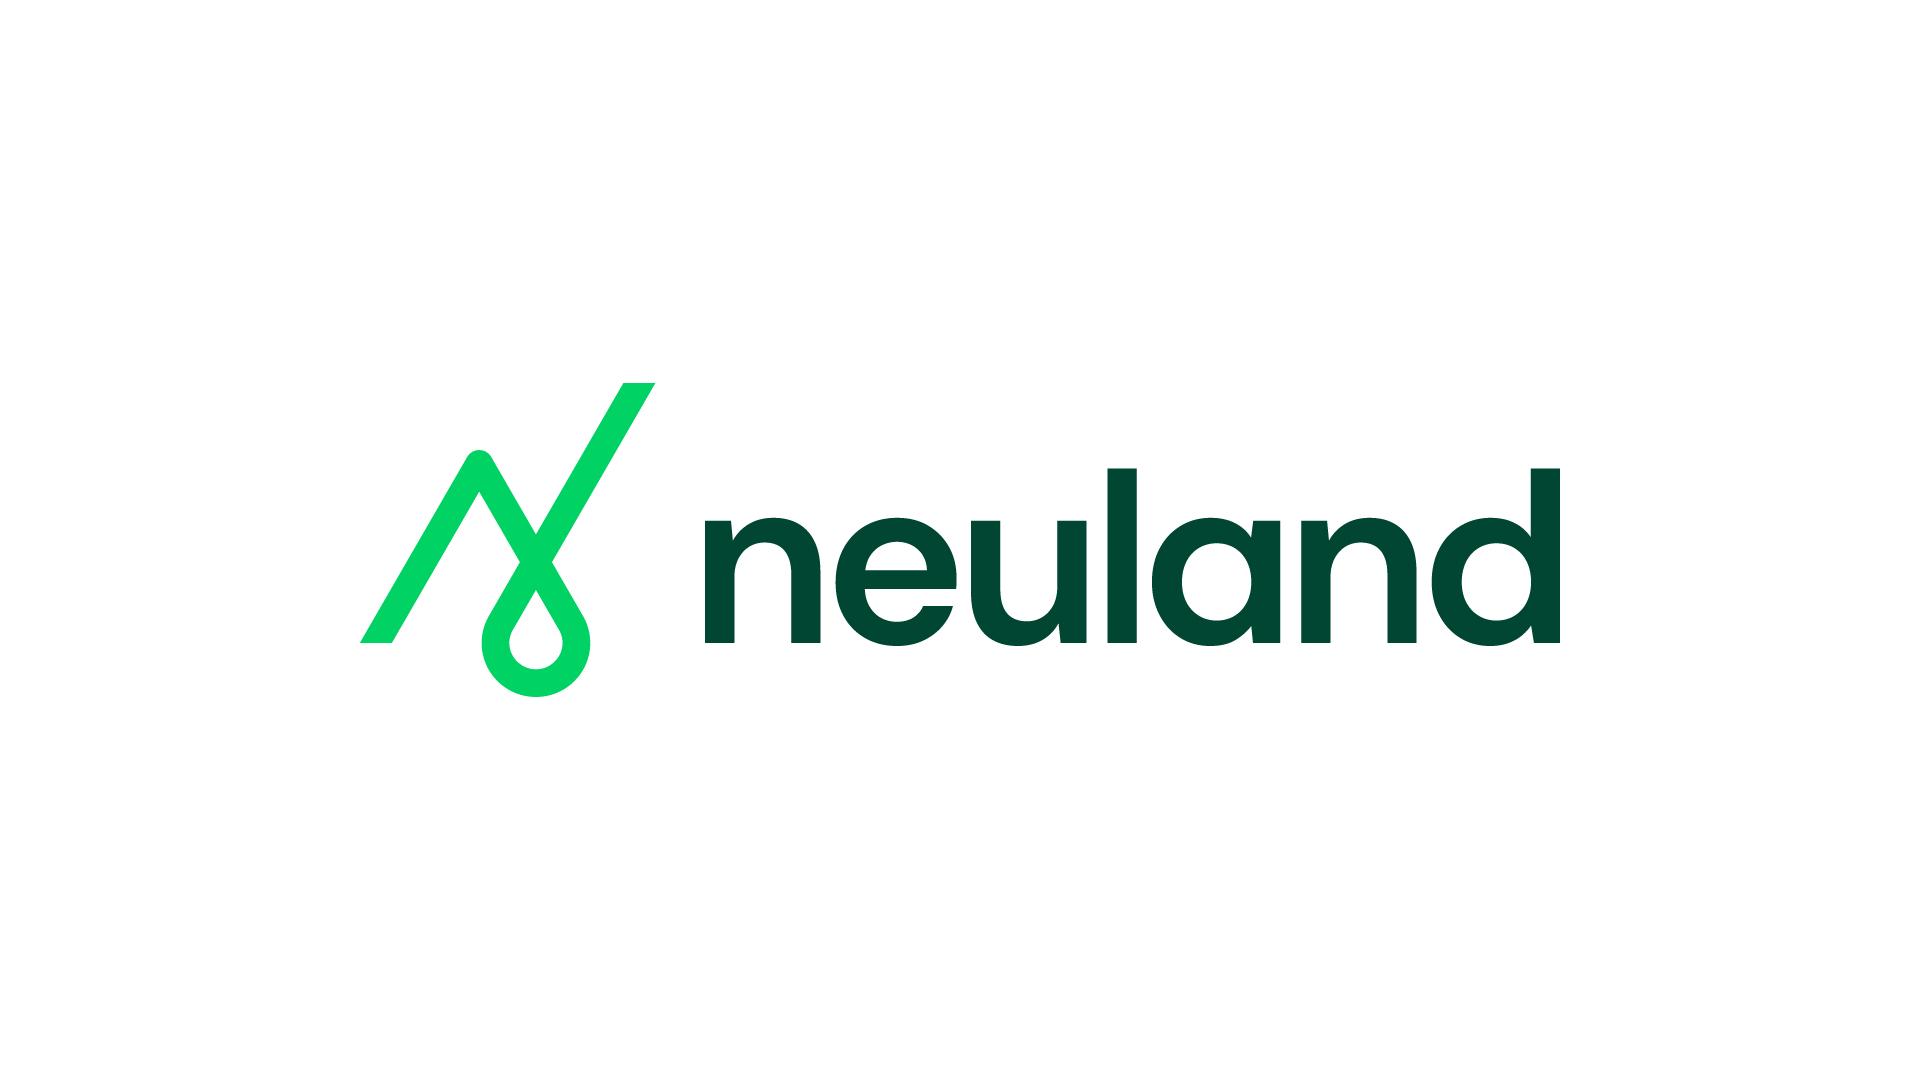 Logo for Neuland Laboratories Ltd